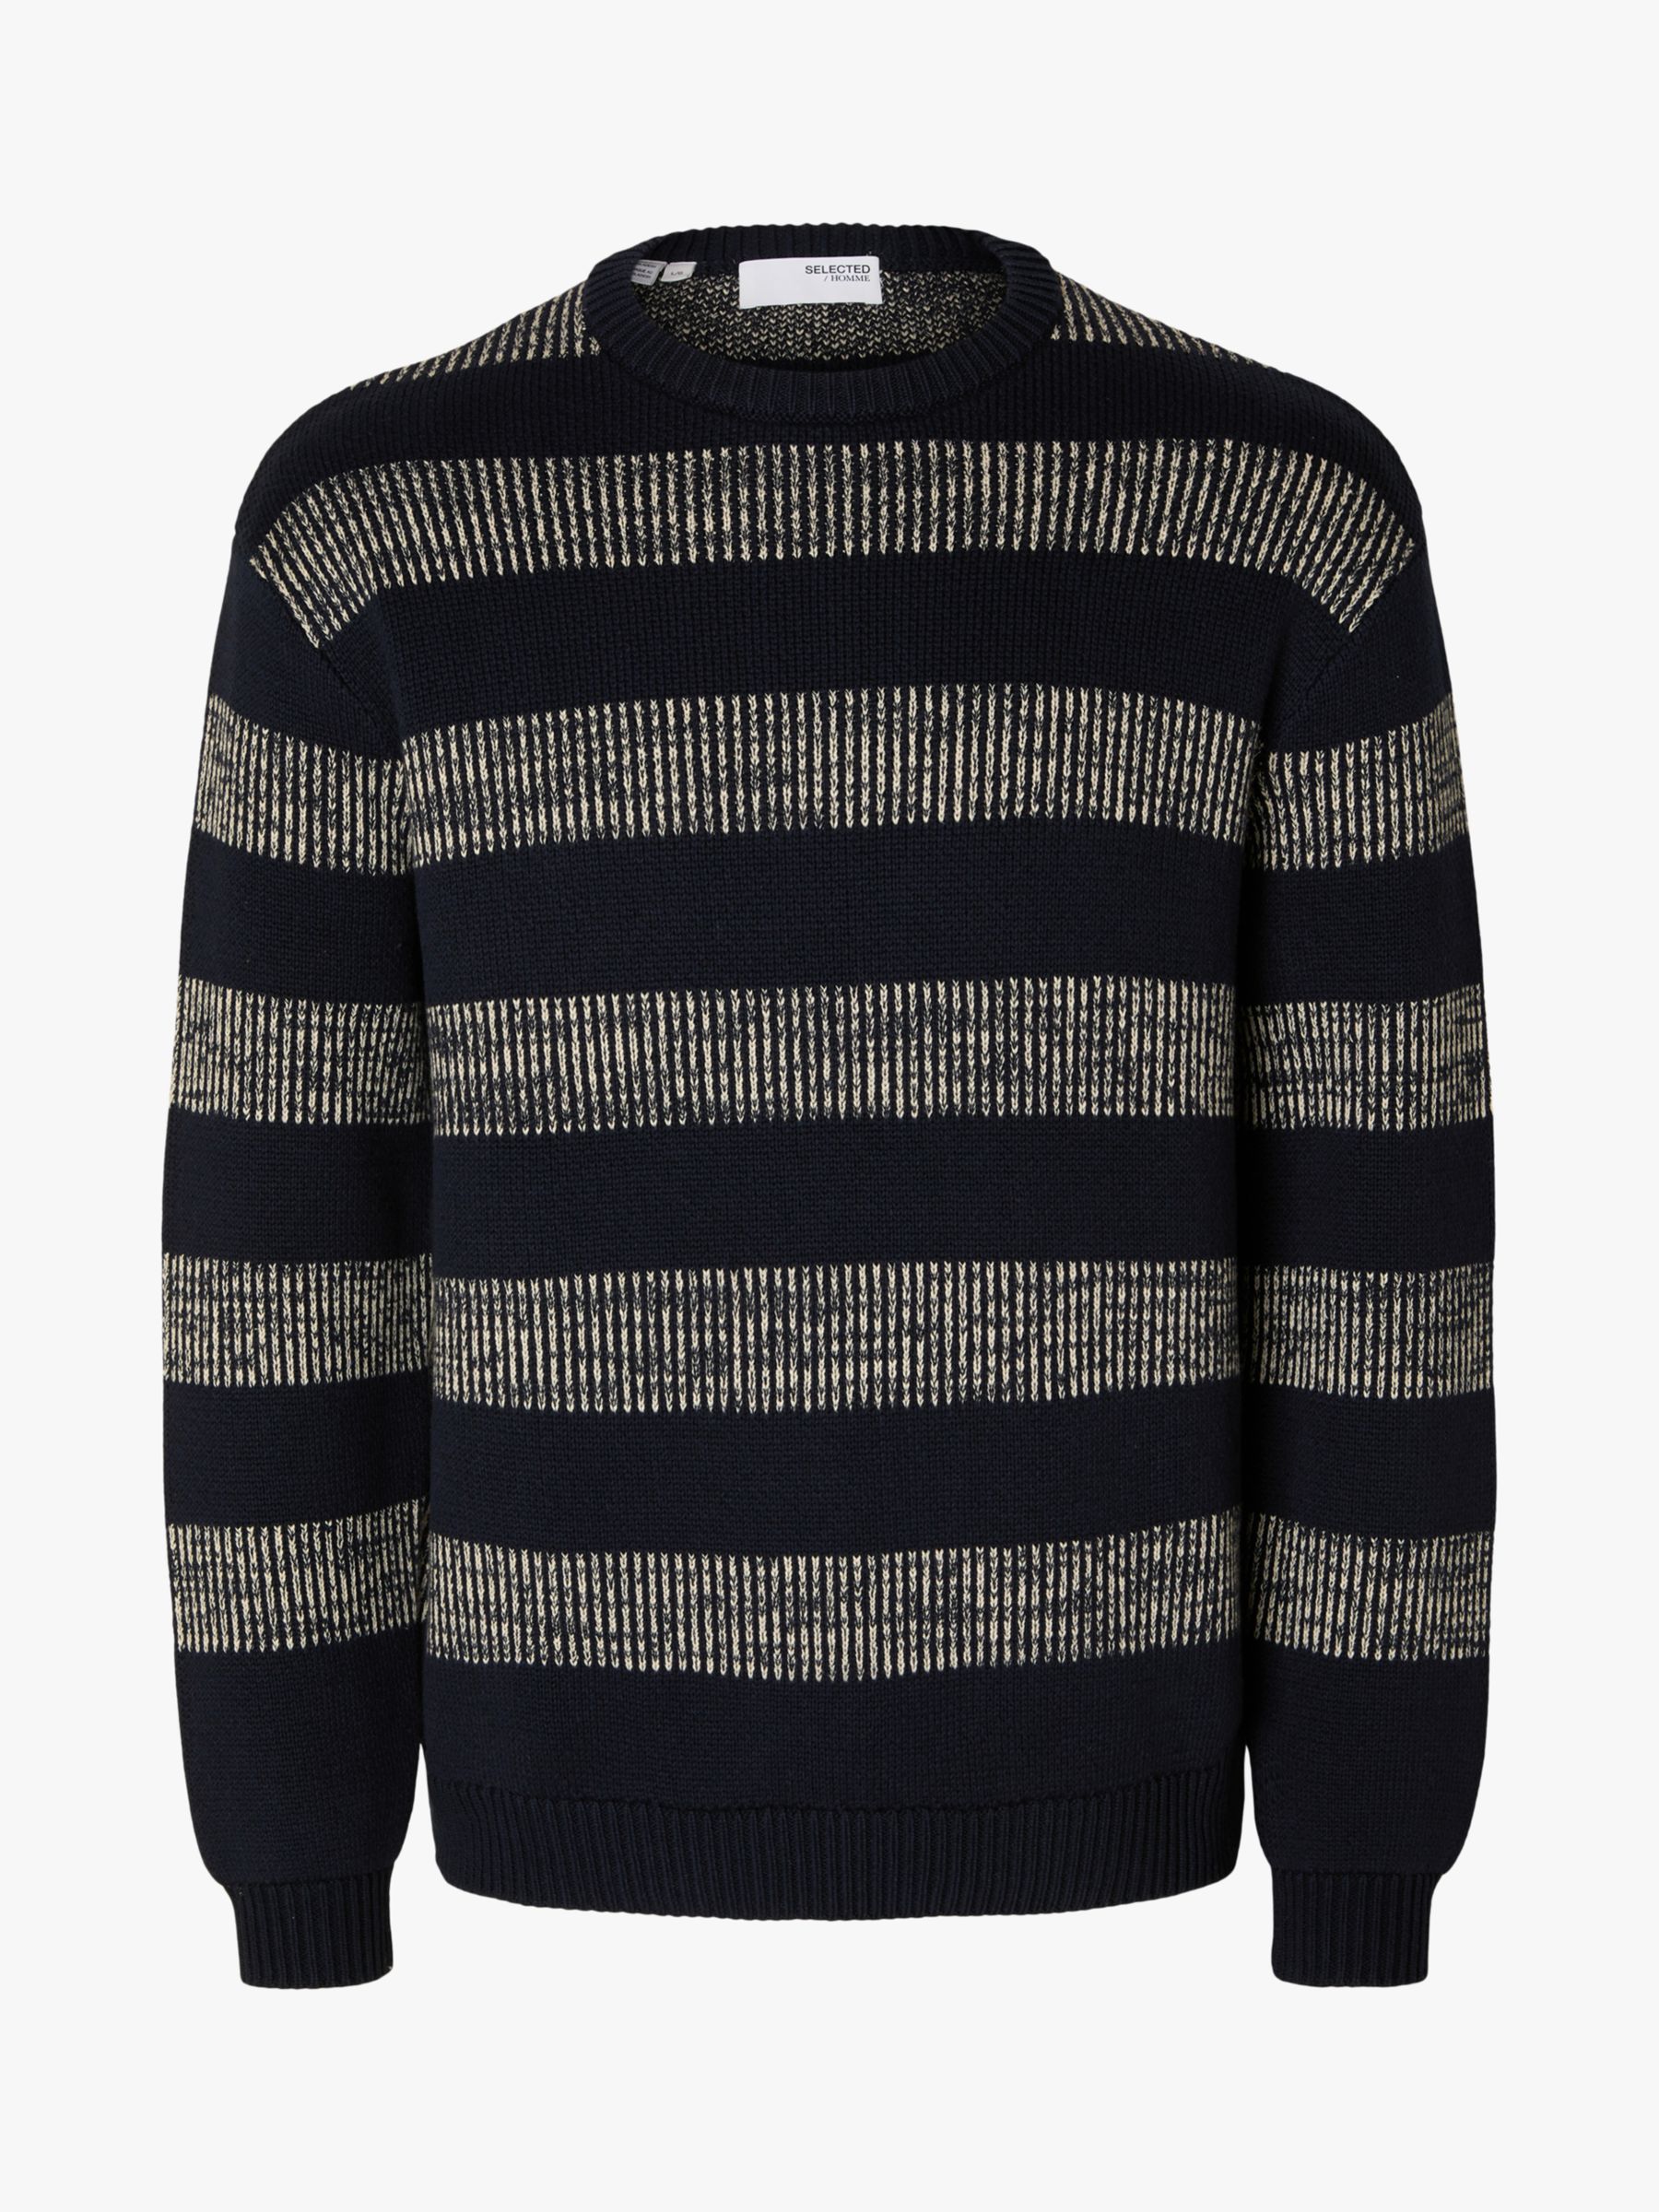 Buy SELECTED HOMME Knitted Pullover Jumper, Black/Multi Online at johnlewis.com